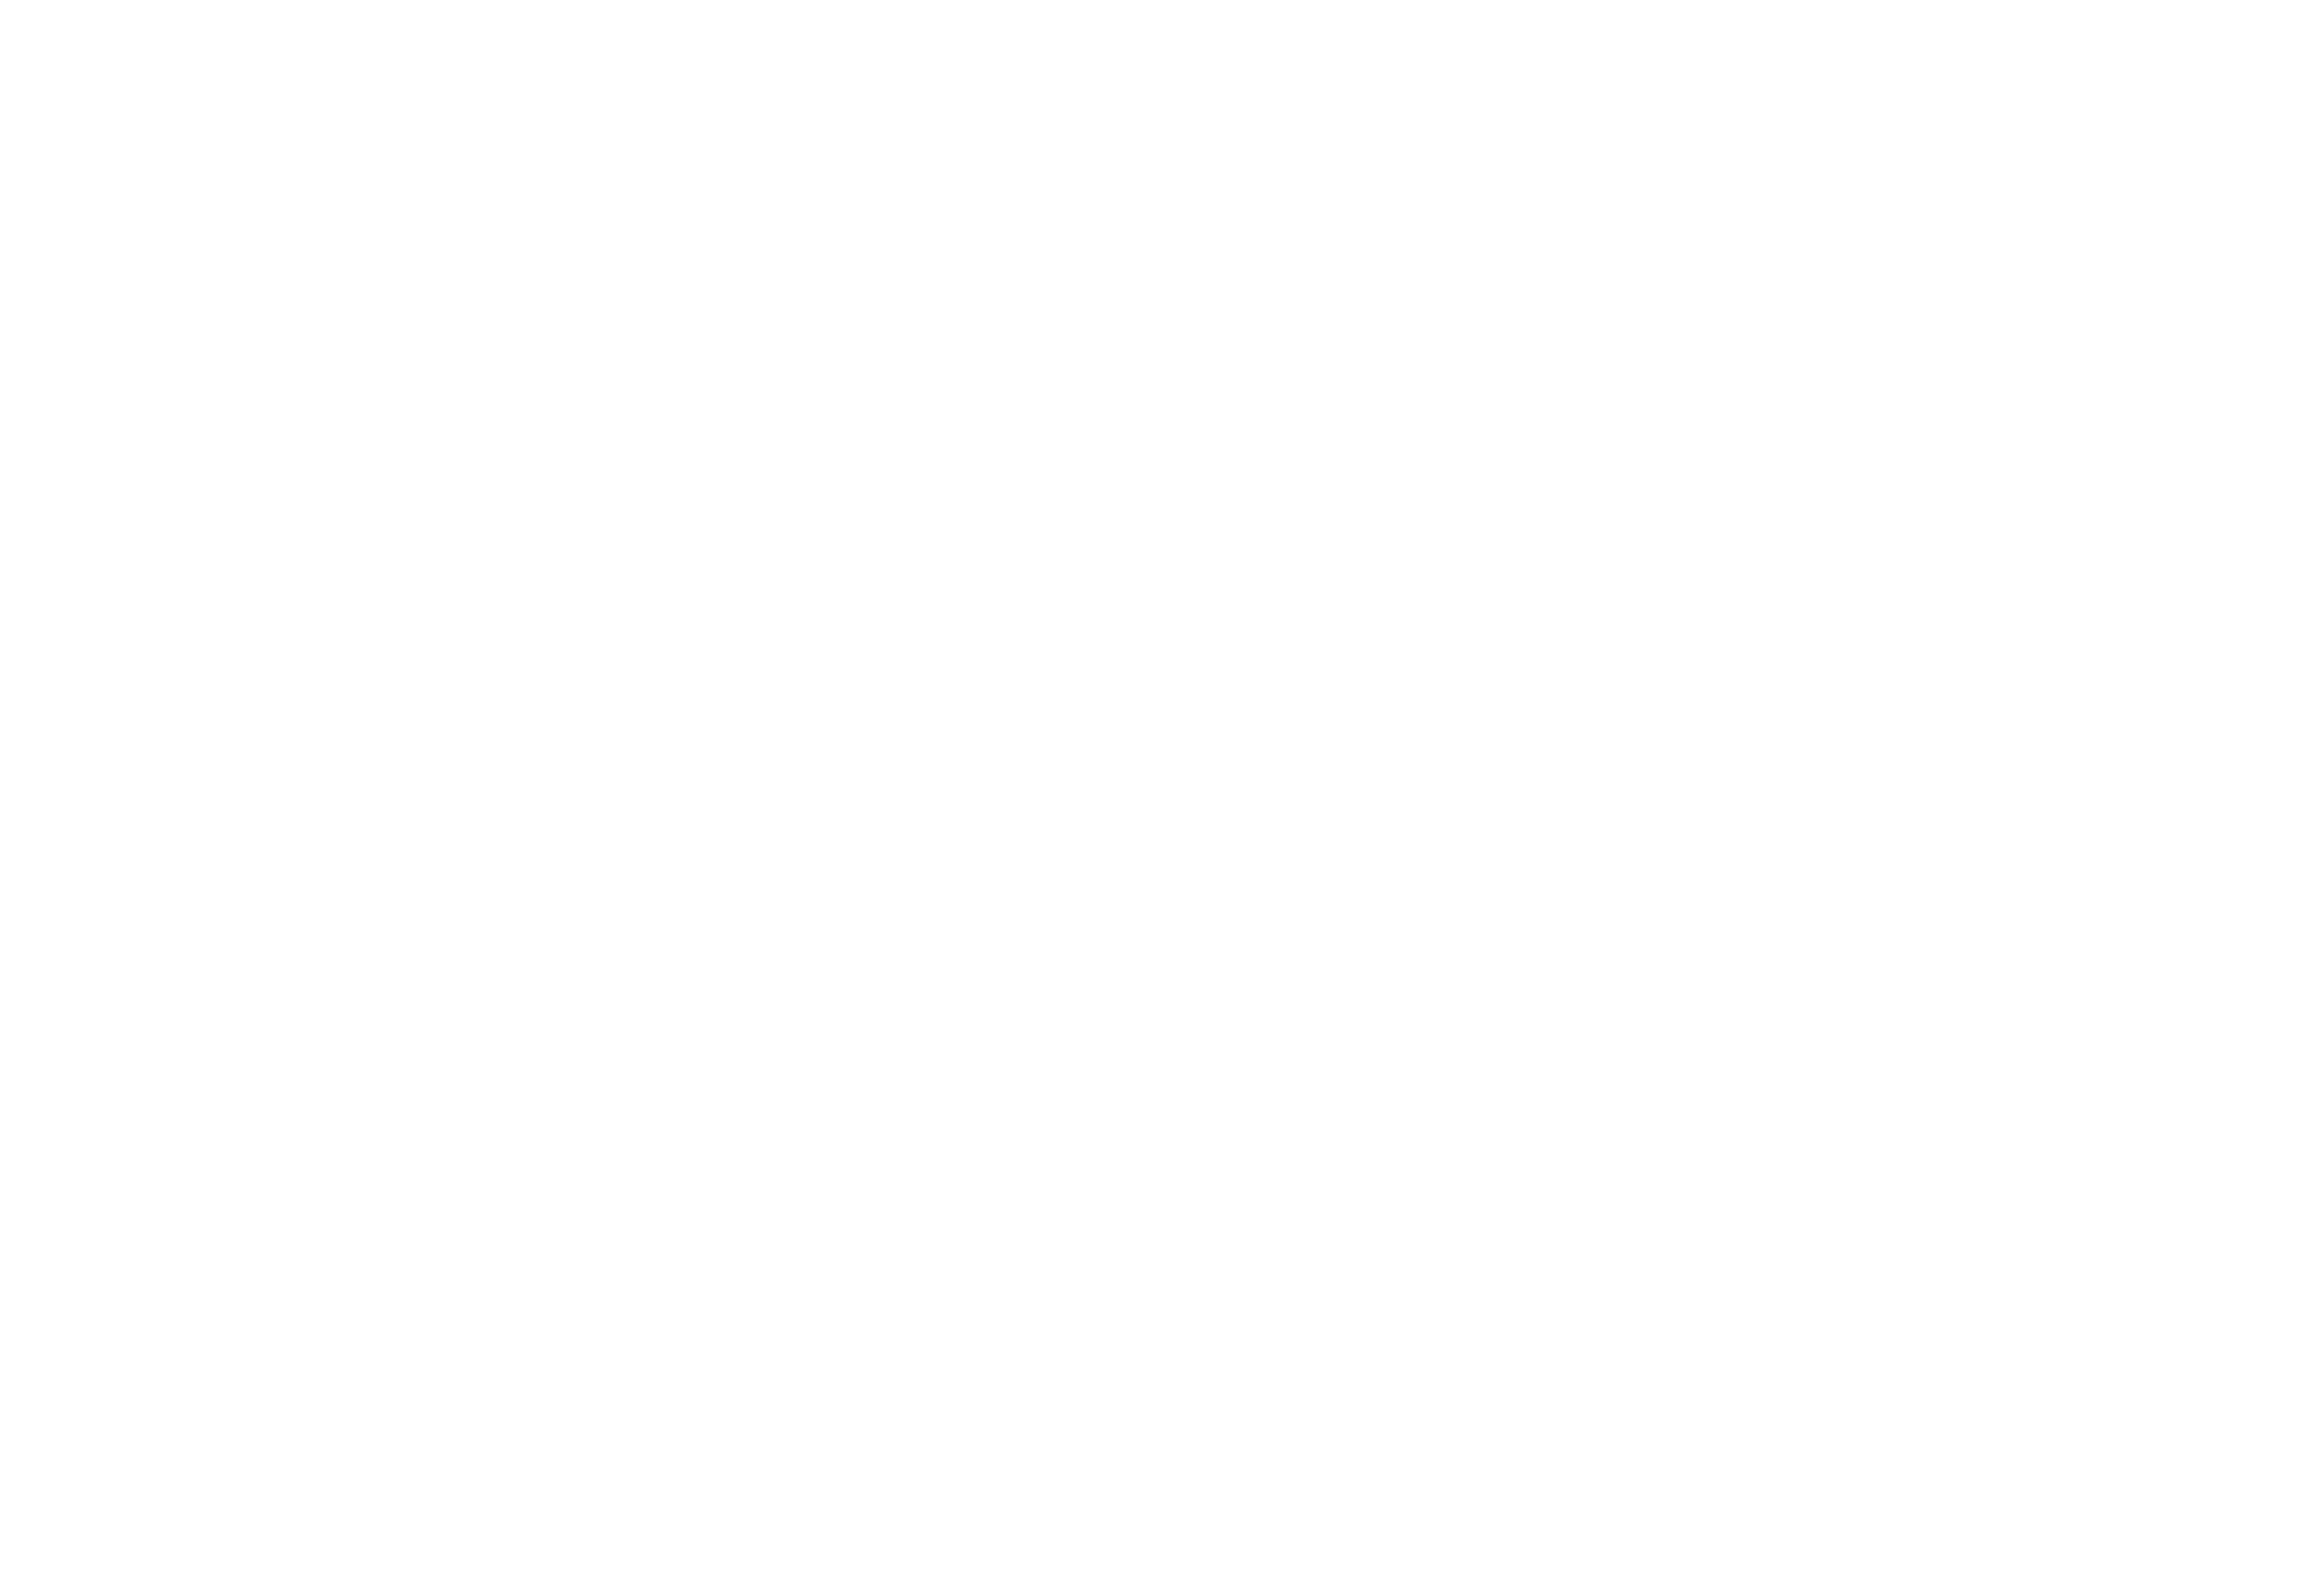 Vaudeville Theatre Company